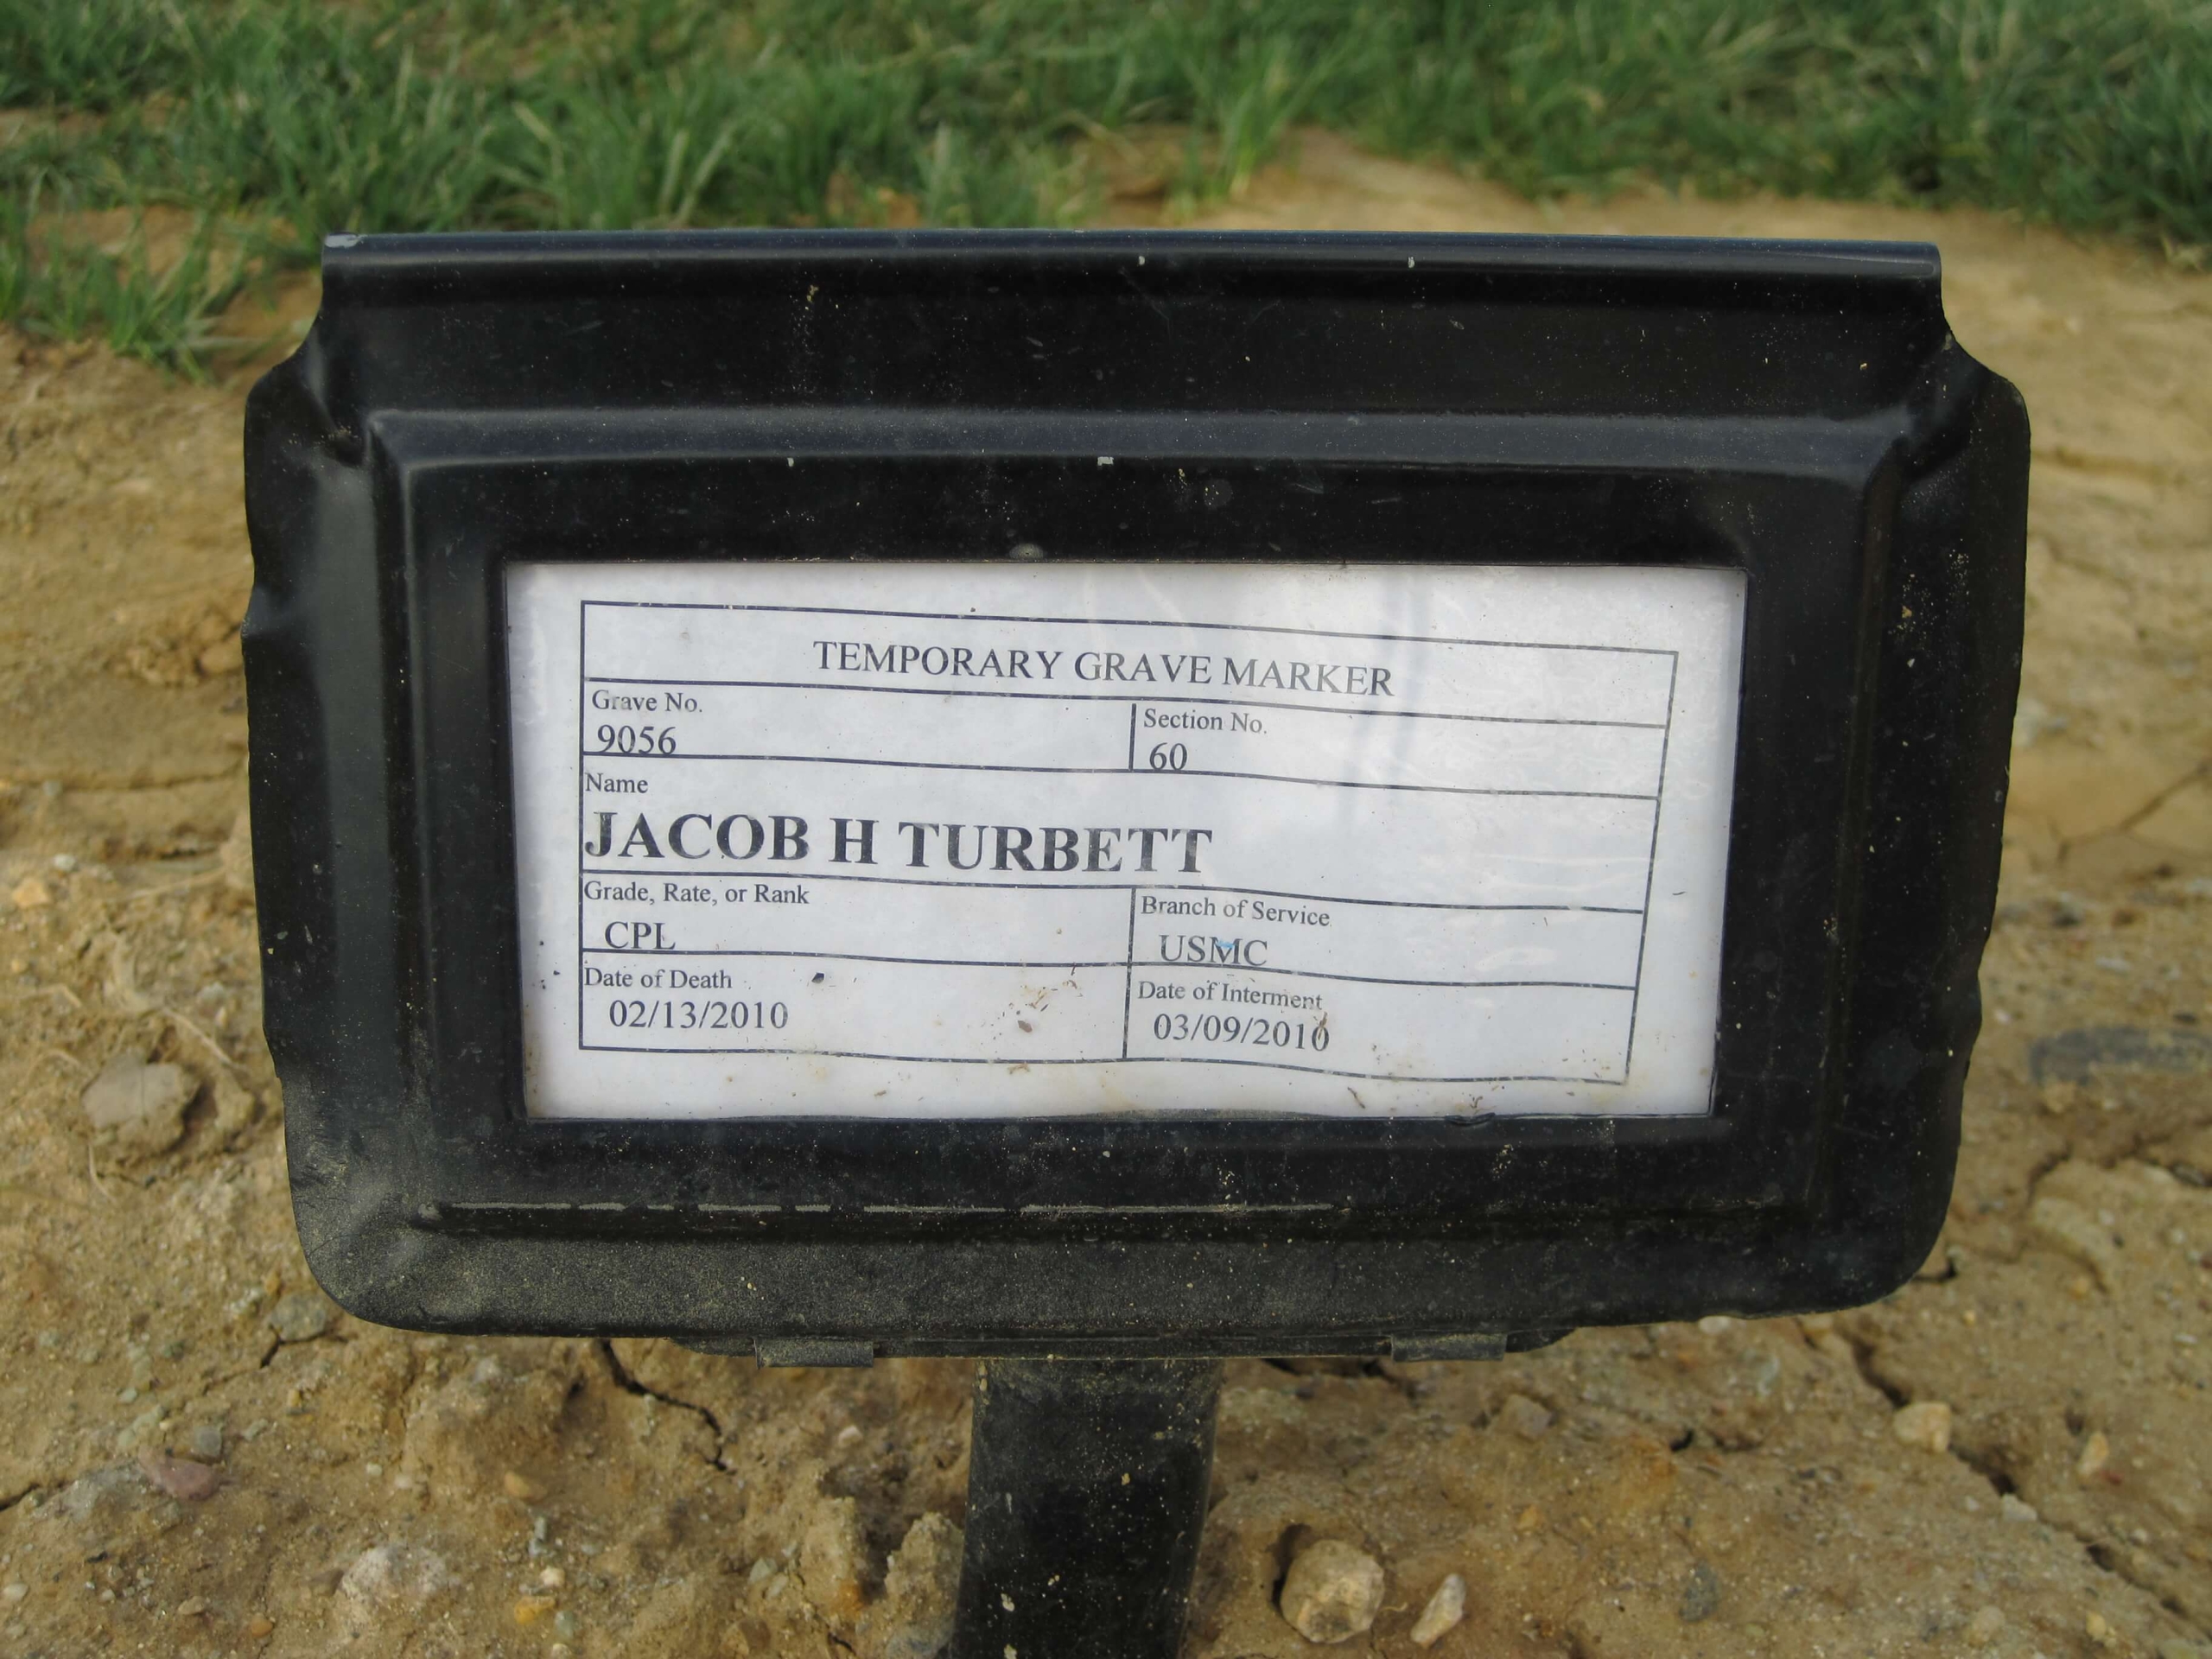 jhturbett-gravesite-photo-by-eileen-horan-april-2010-001